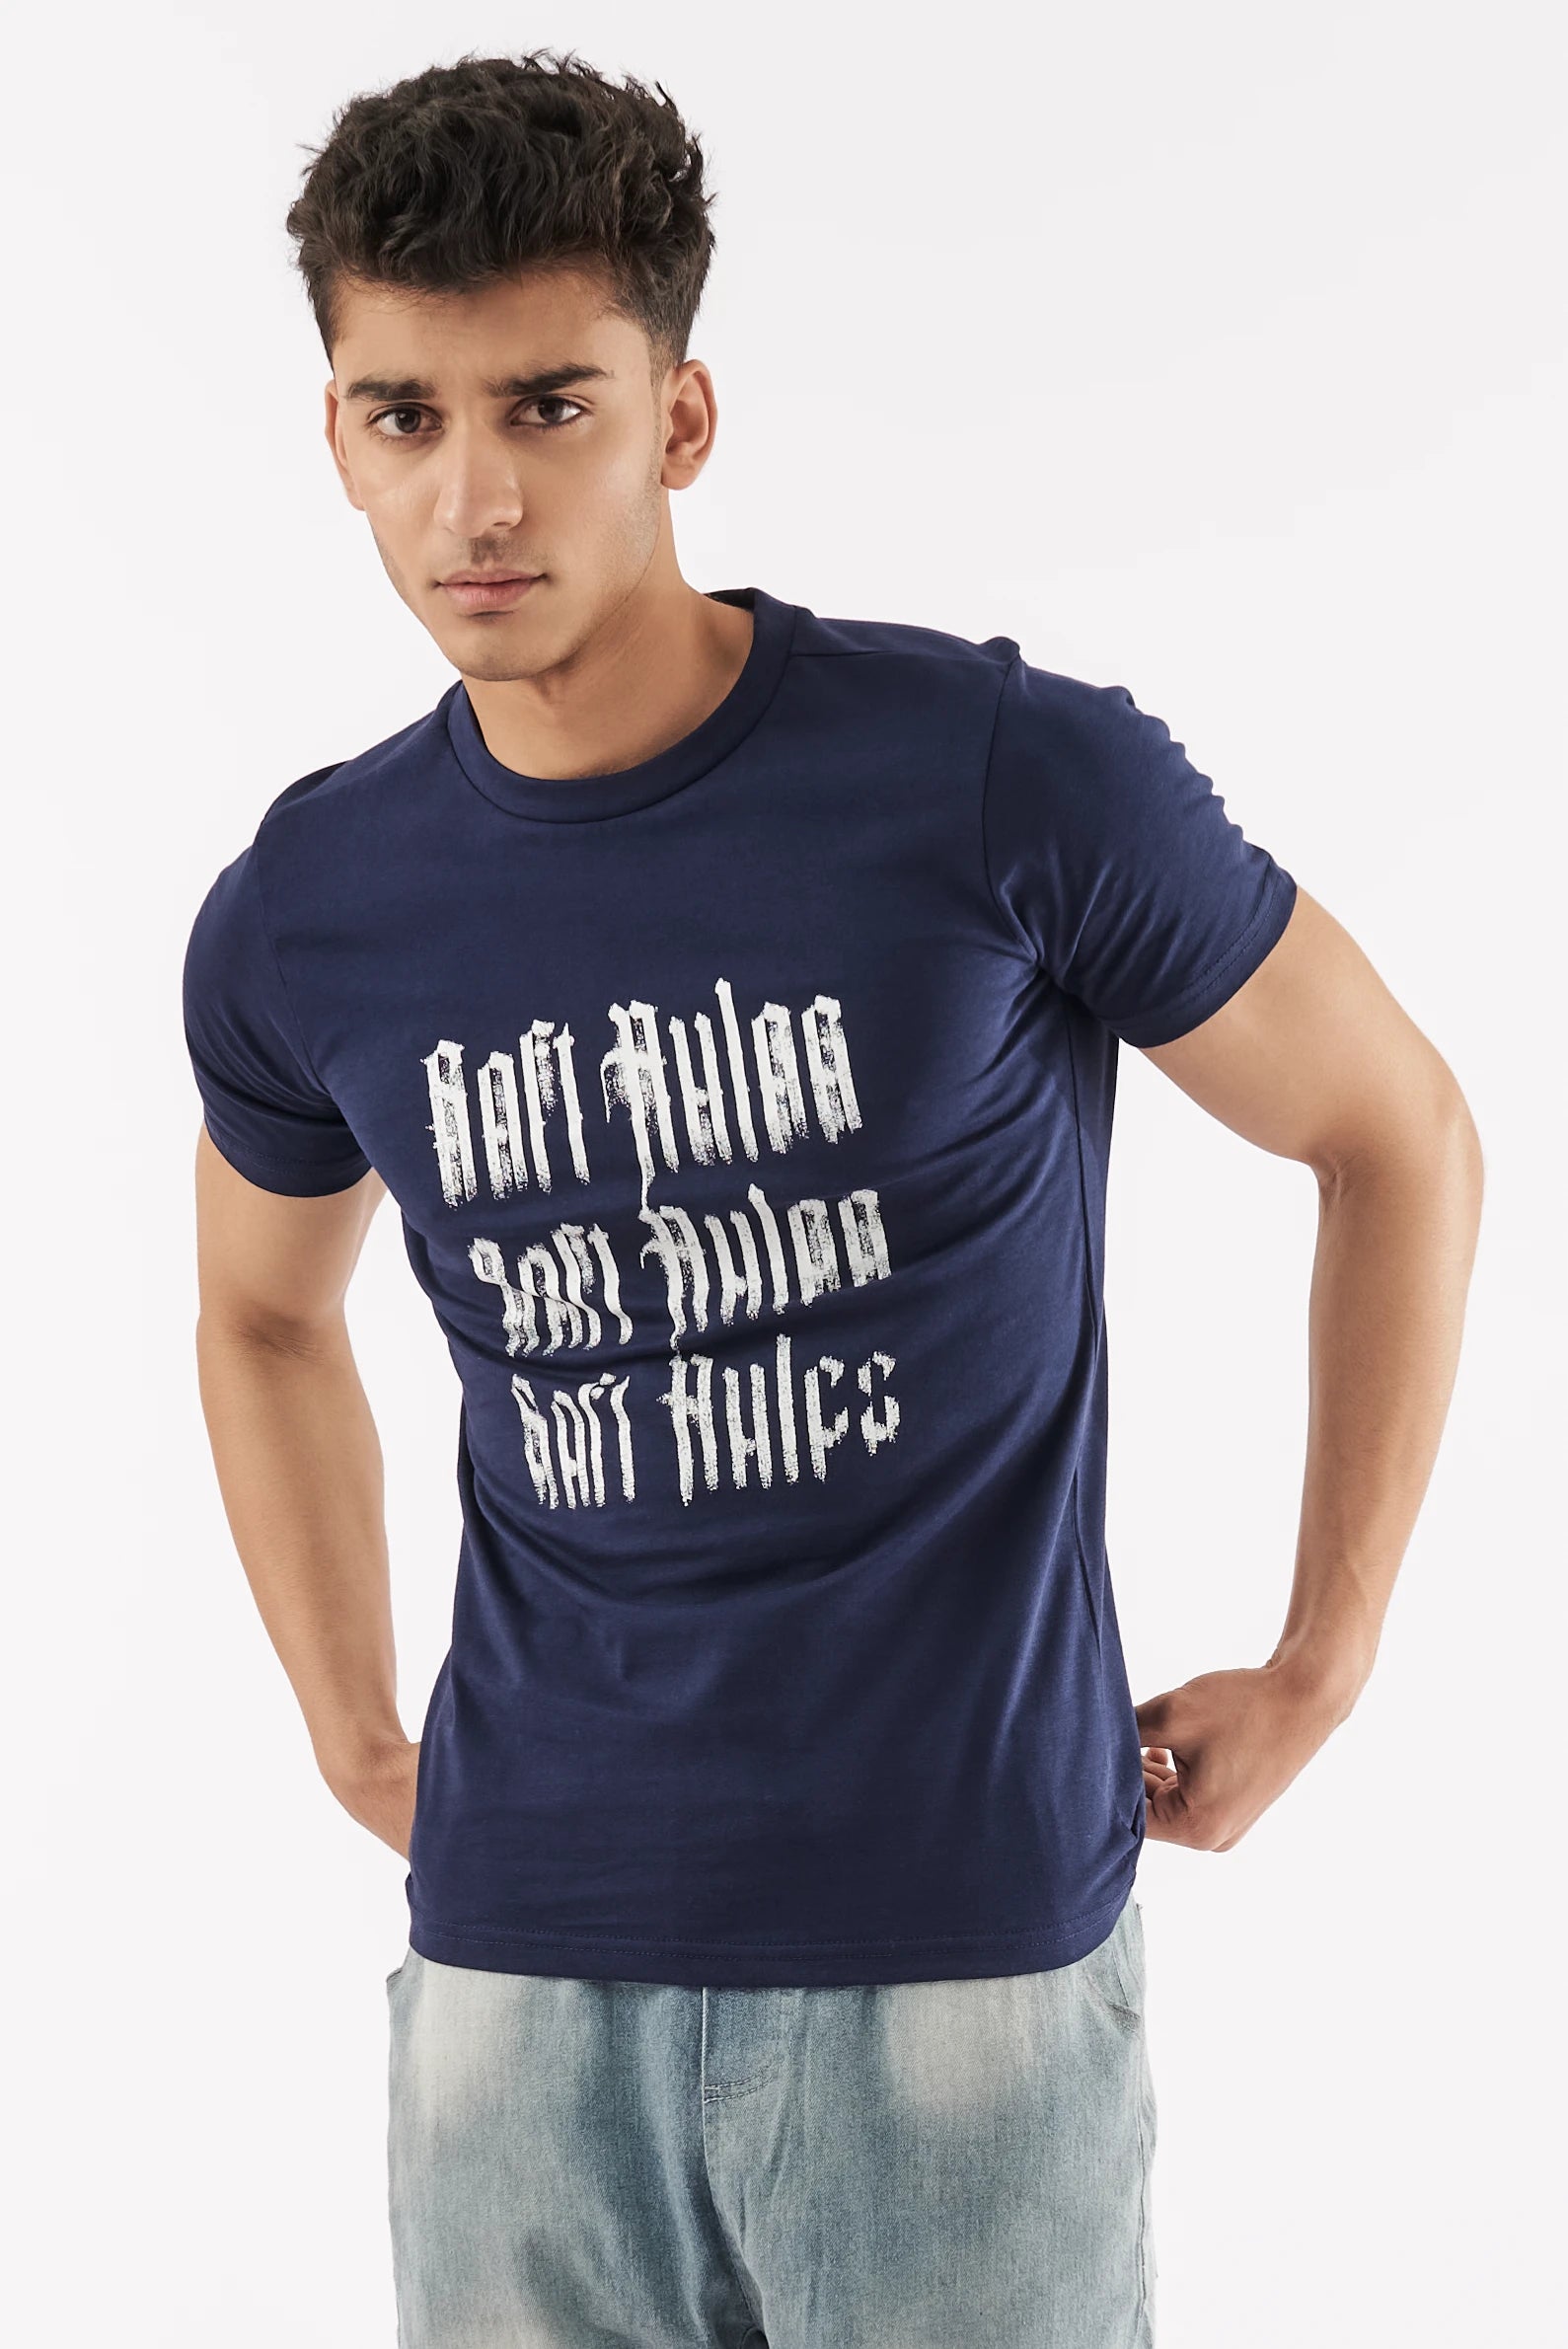 Men's Rules Graphics T-Shirt Navy